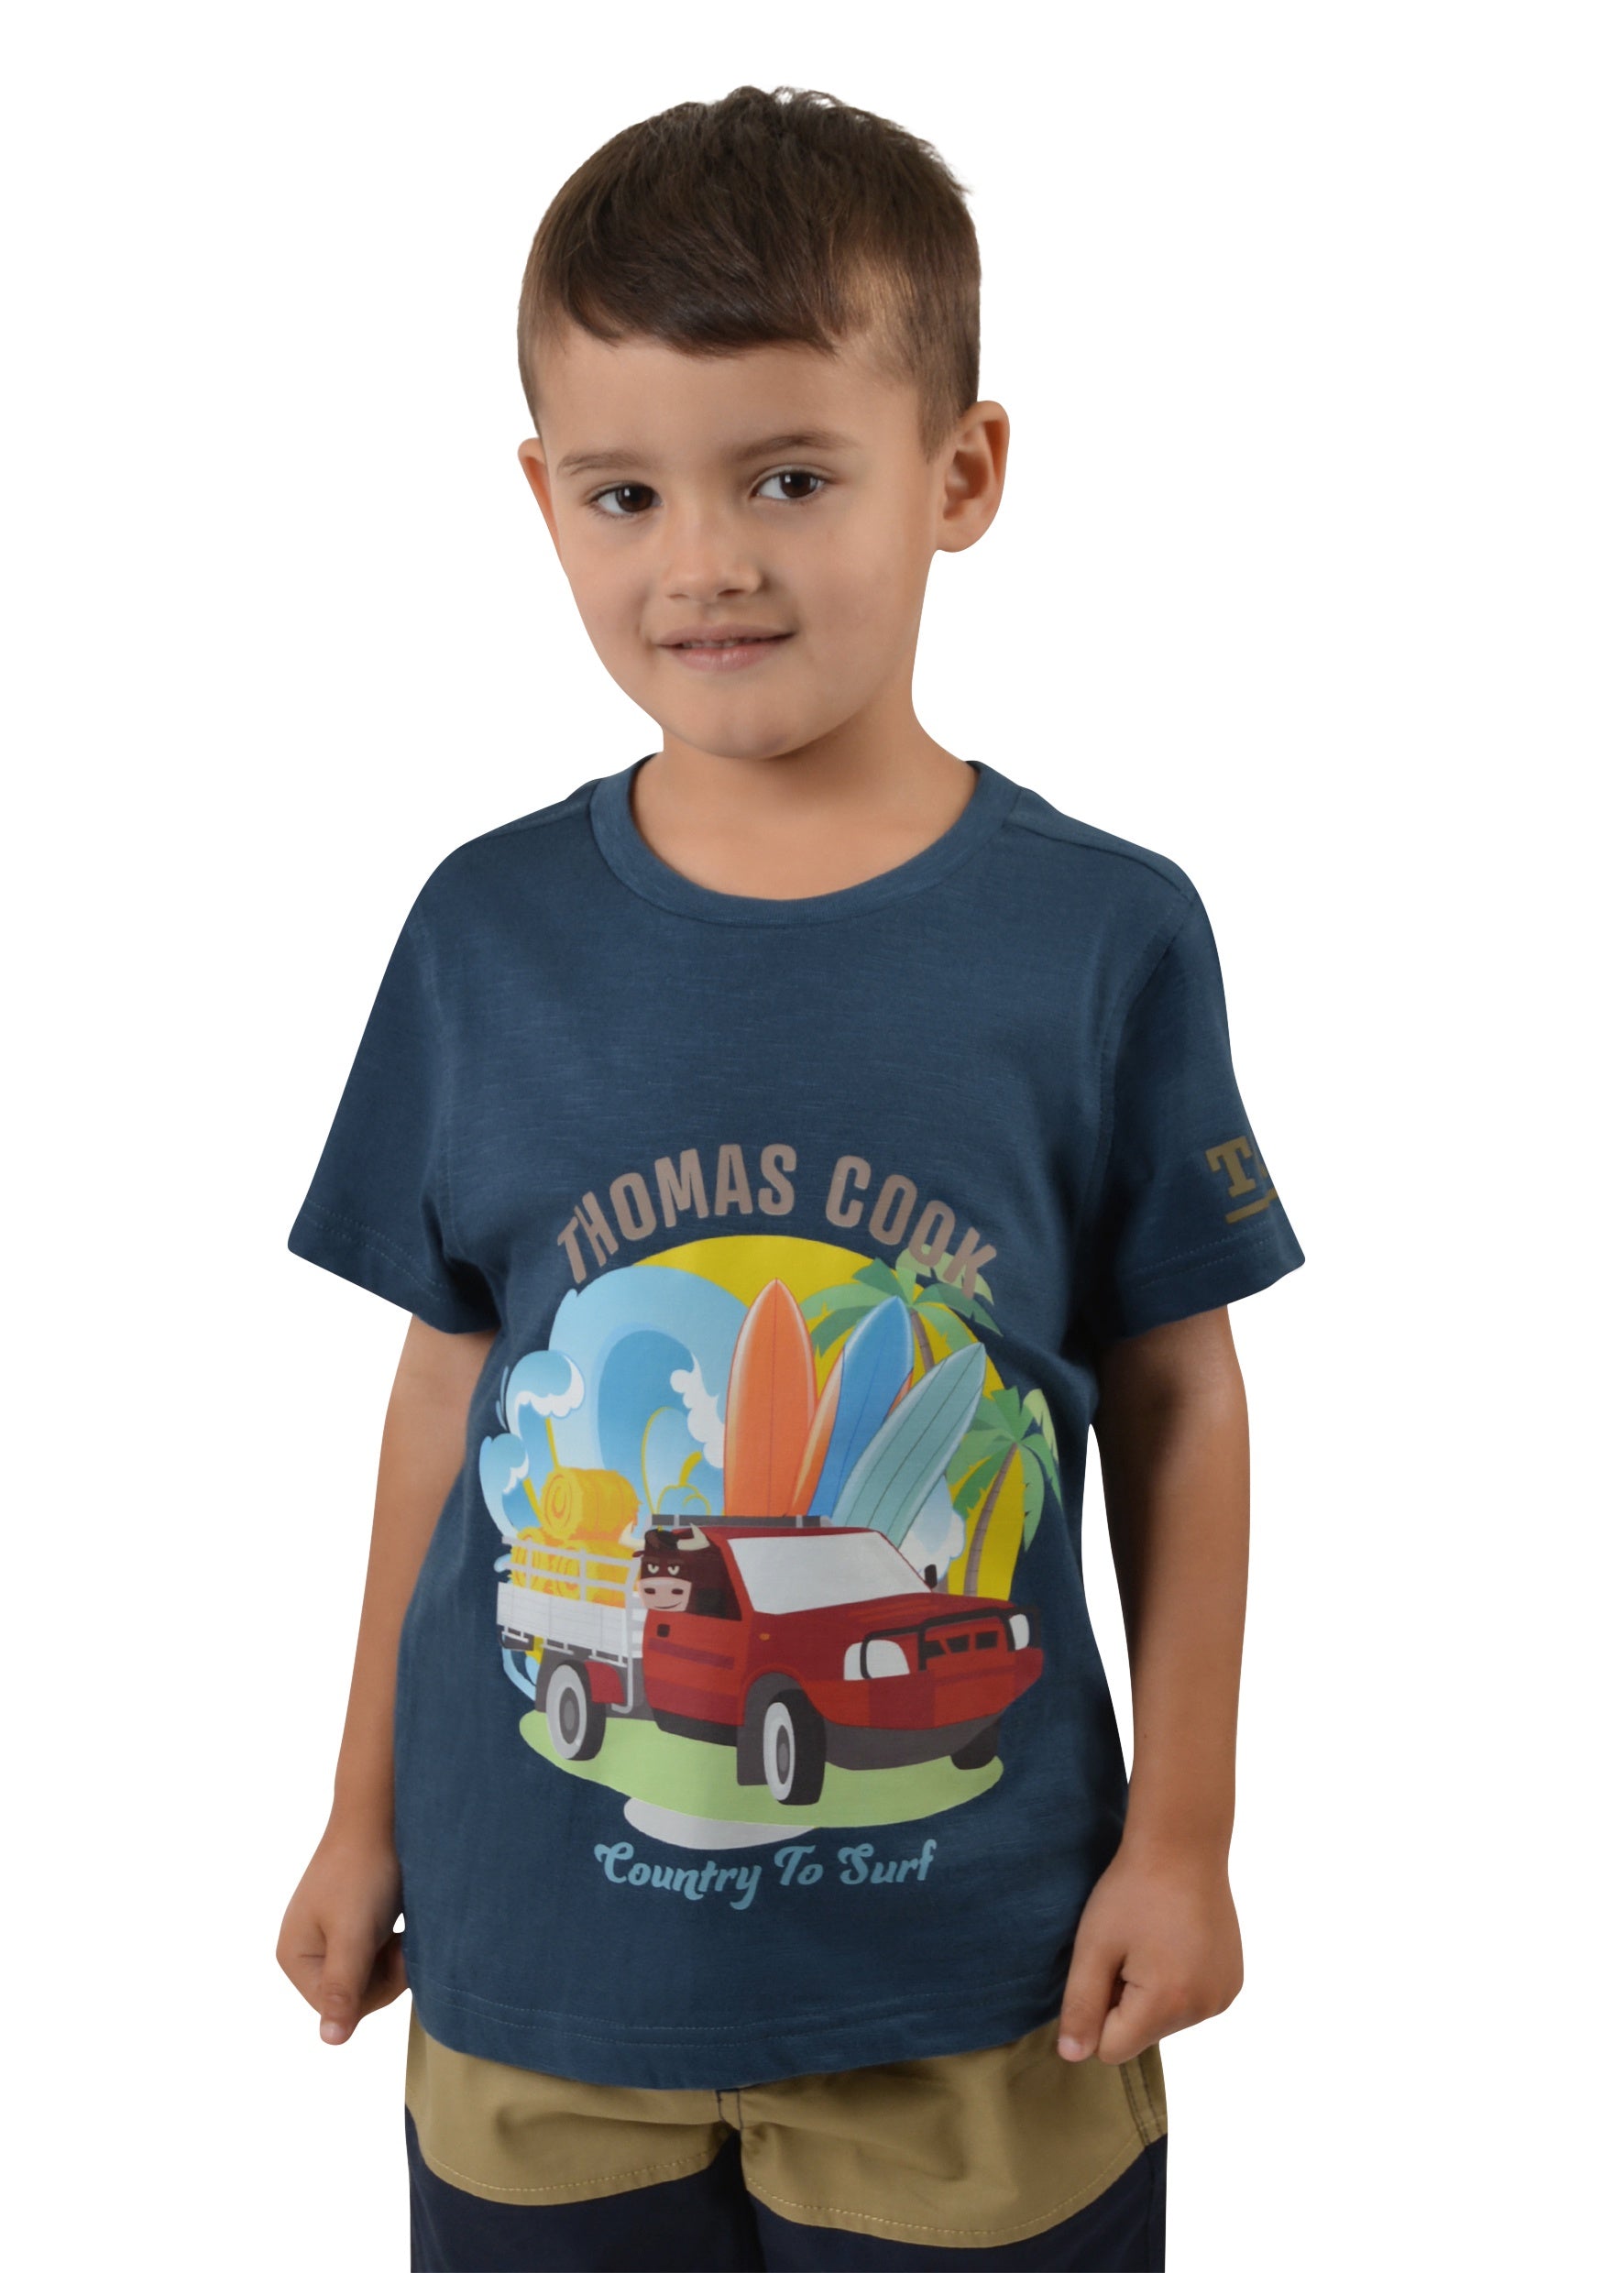 Boys Thomas Cook Country to Surf Tee Tshirt (6815069012045)